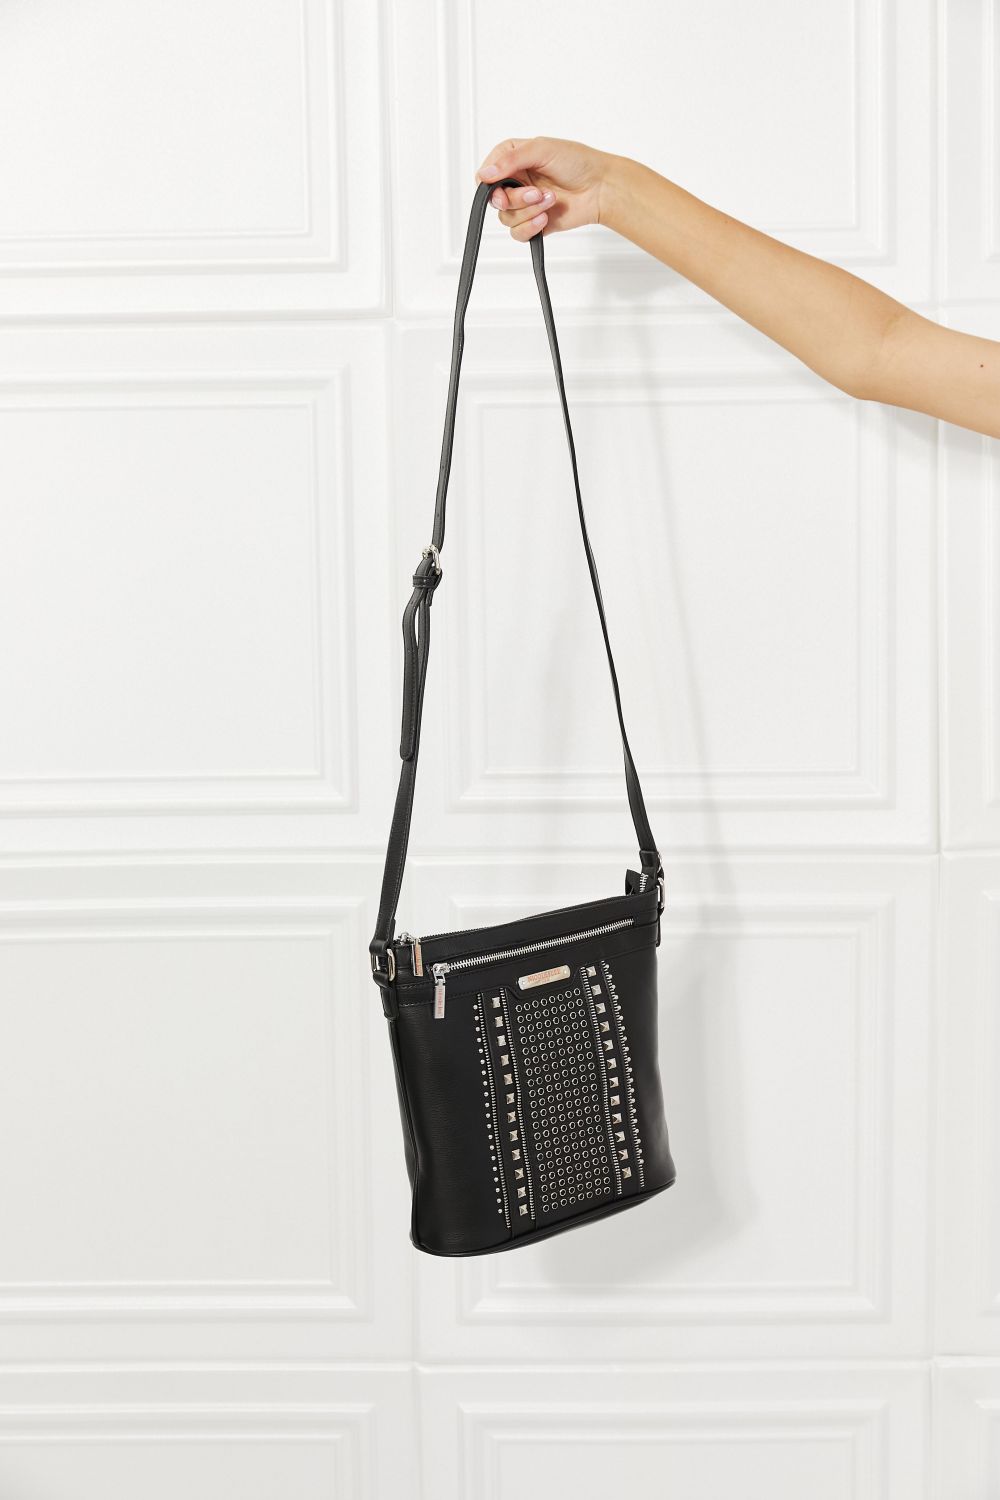 Nicole Lee USA Love Handbag - Tigbul's Fashion